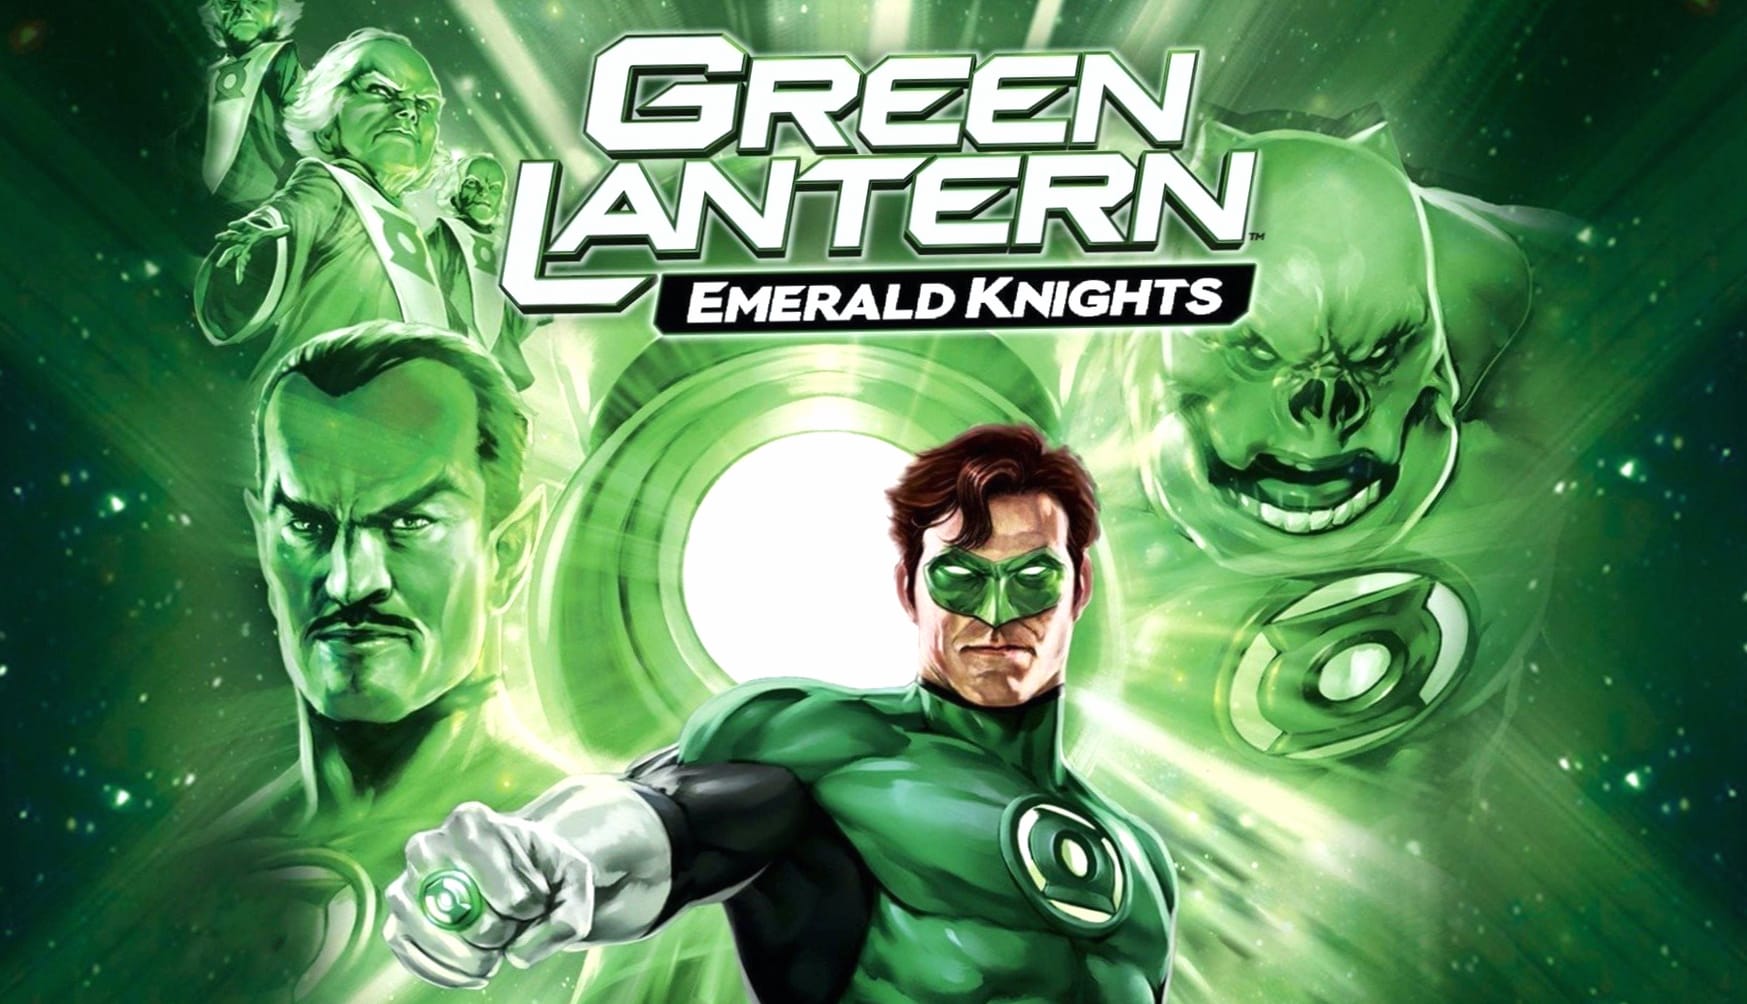 Green Lantern emerald knights at 2048 x 2048 iPad size wallpapers HD quality